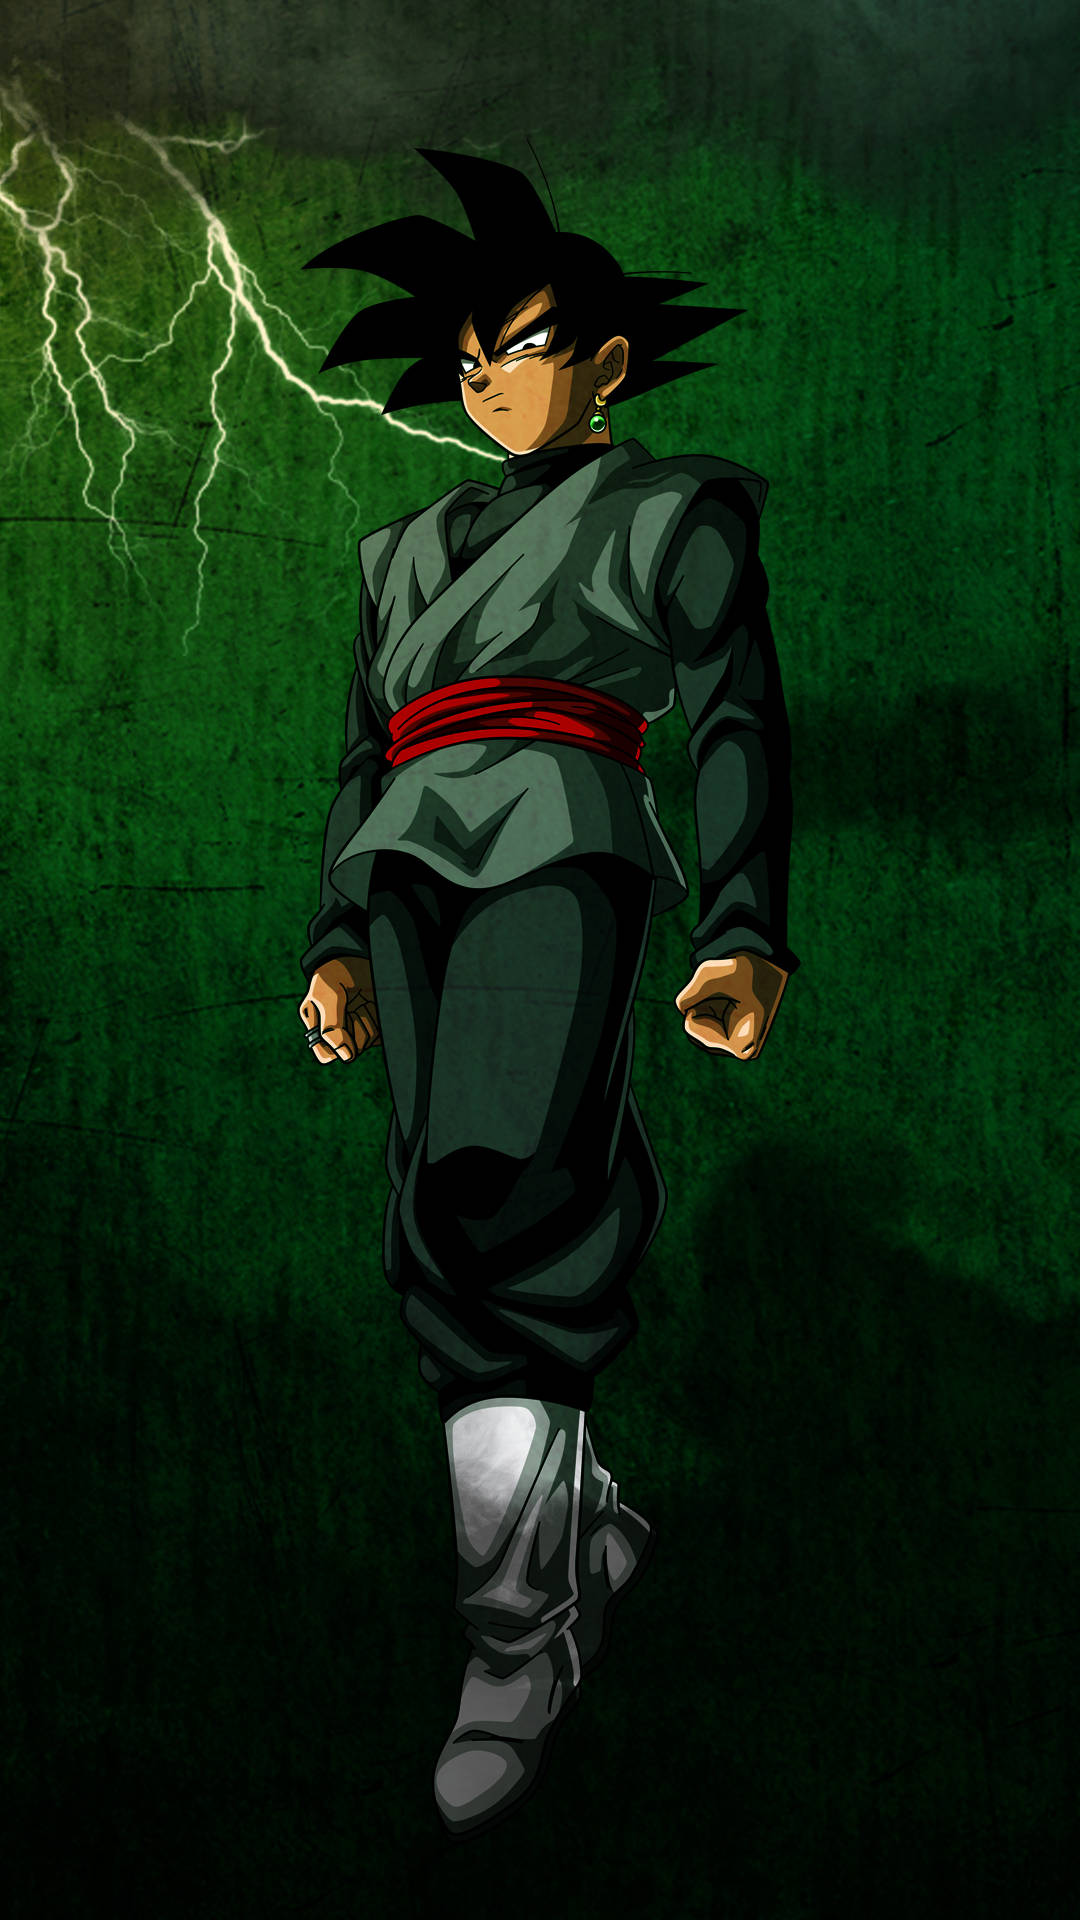 Black Goku in Green Aura - Anime Phone Wallpaper Wallpaper